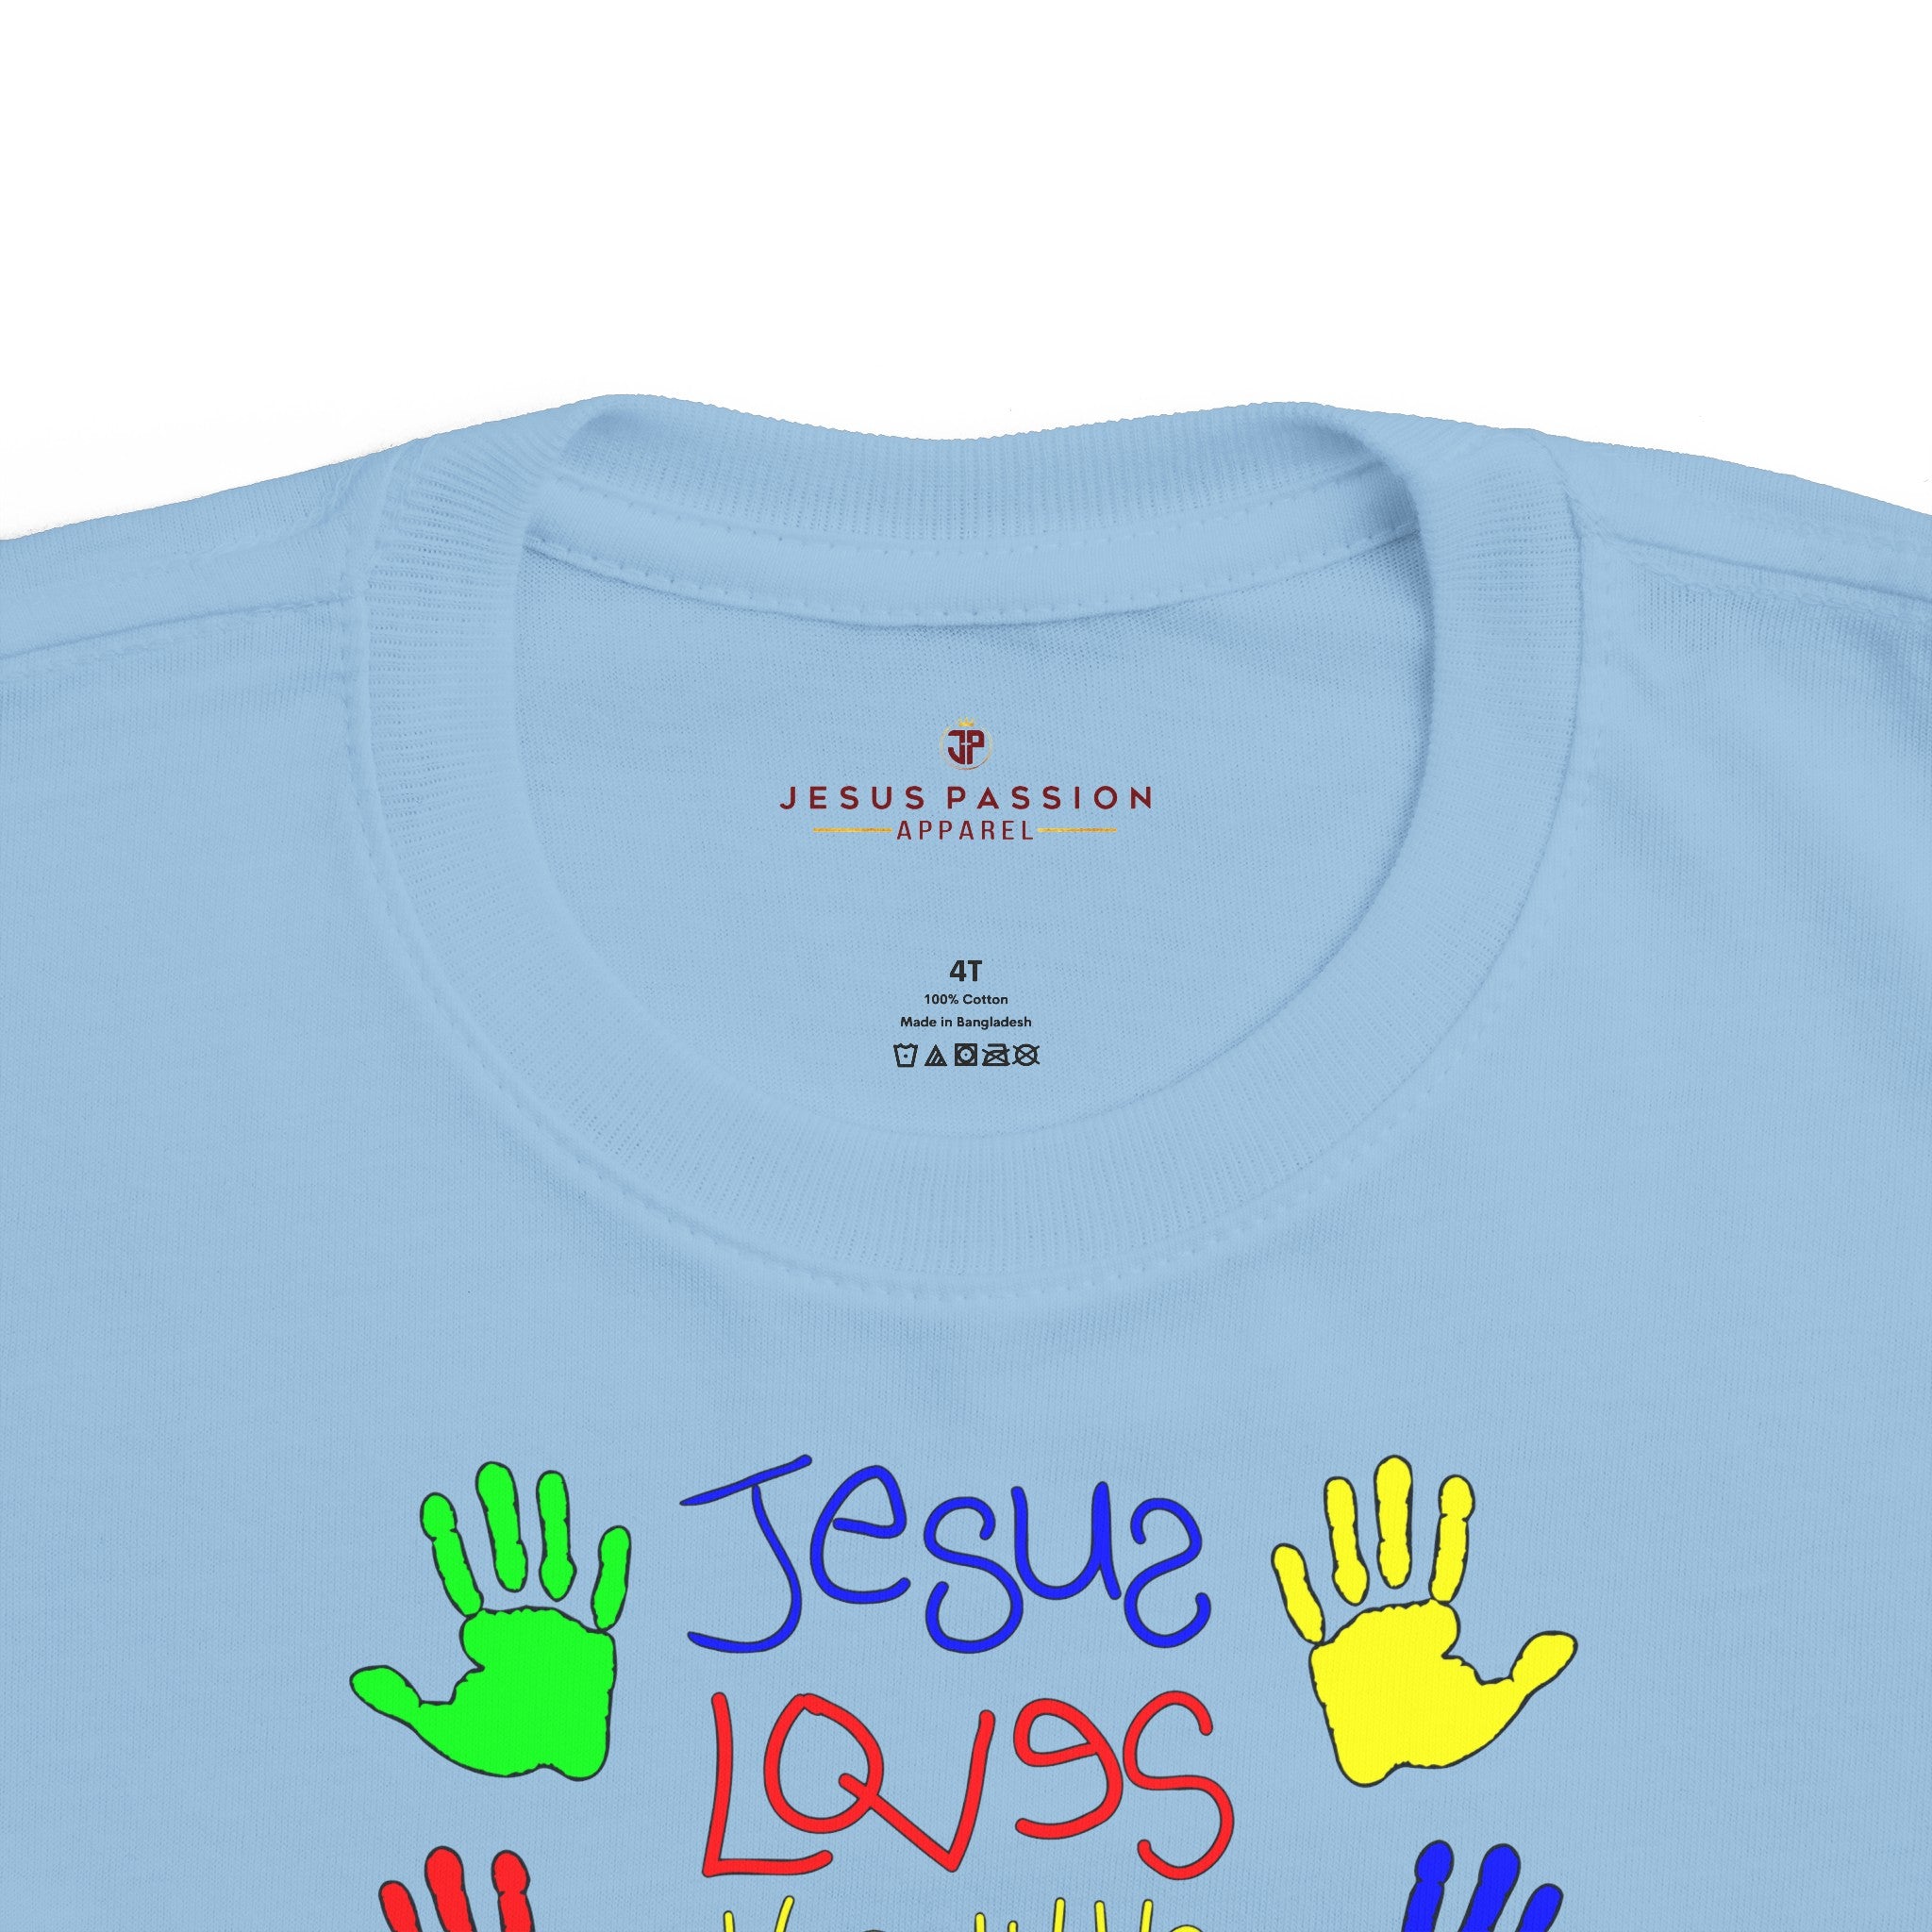 Jesus Loves the Little Children Toddler's Fine Jersey Tee Color: Light Blue Size: 2T Jesus Passion Apparel